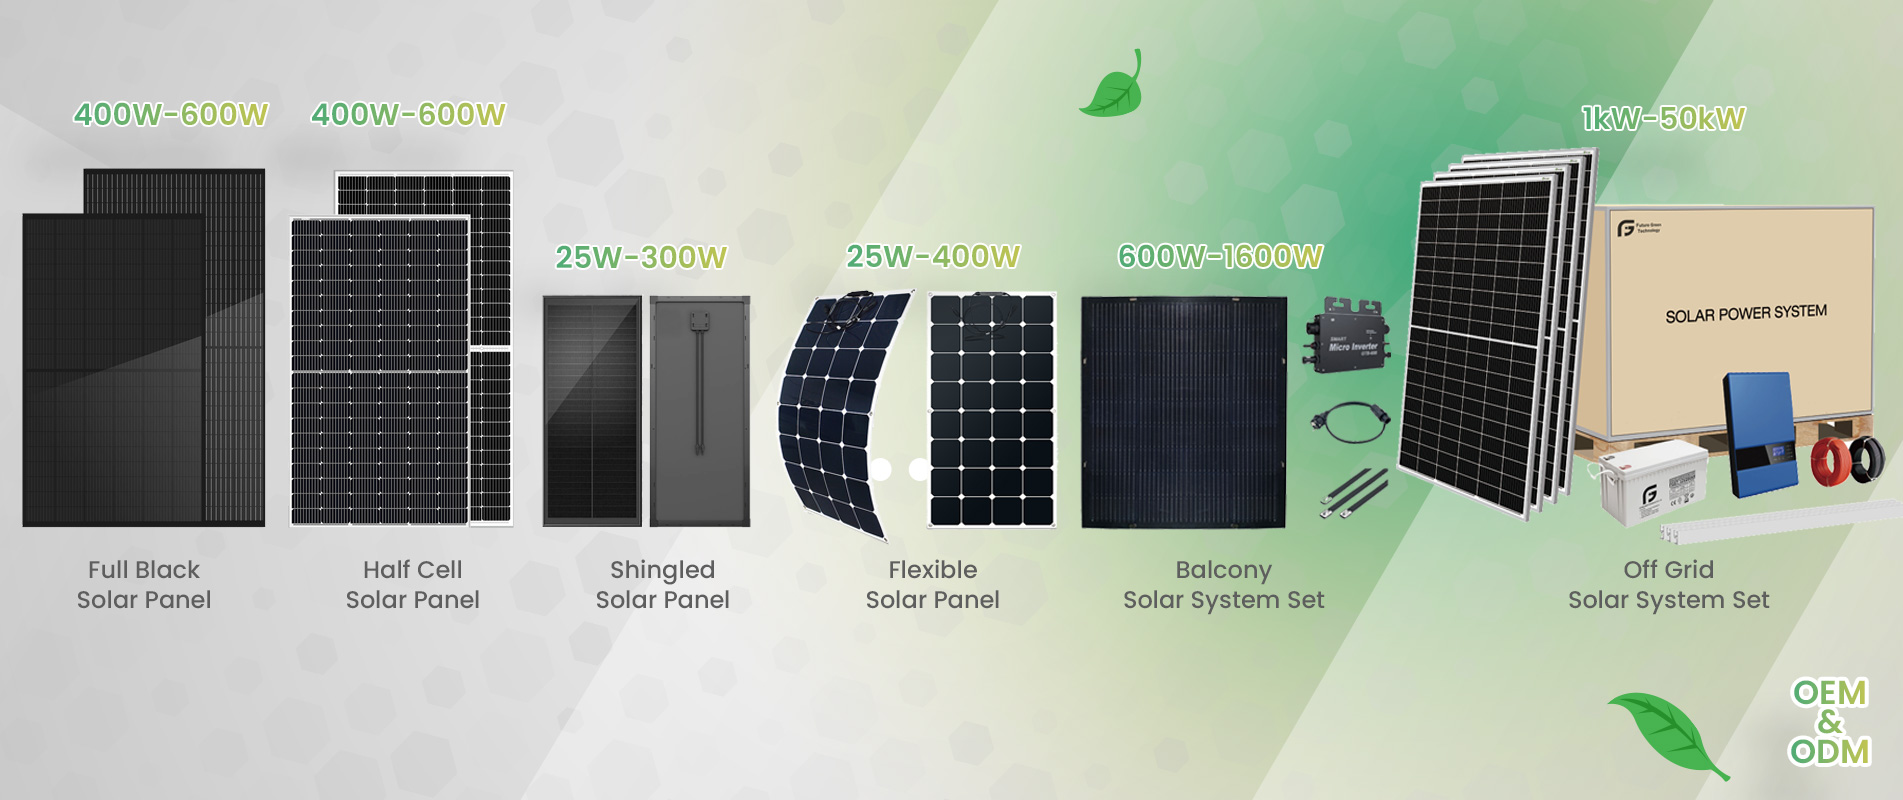 Solar Panel, Flexible Panel, Power System